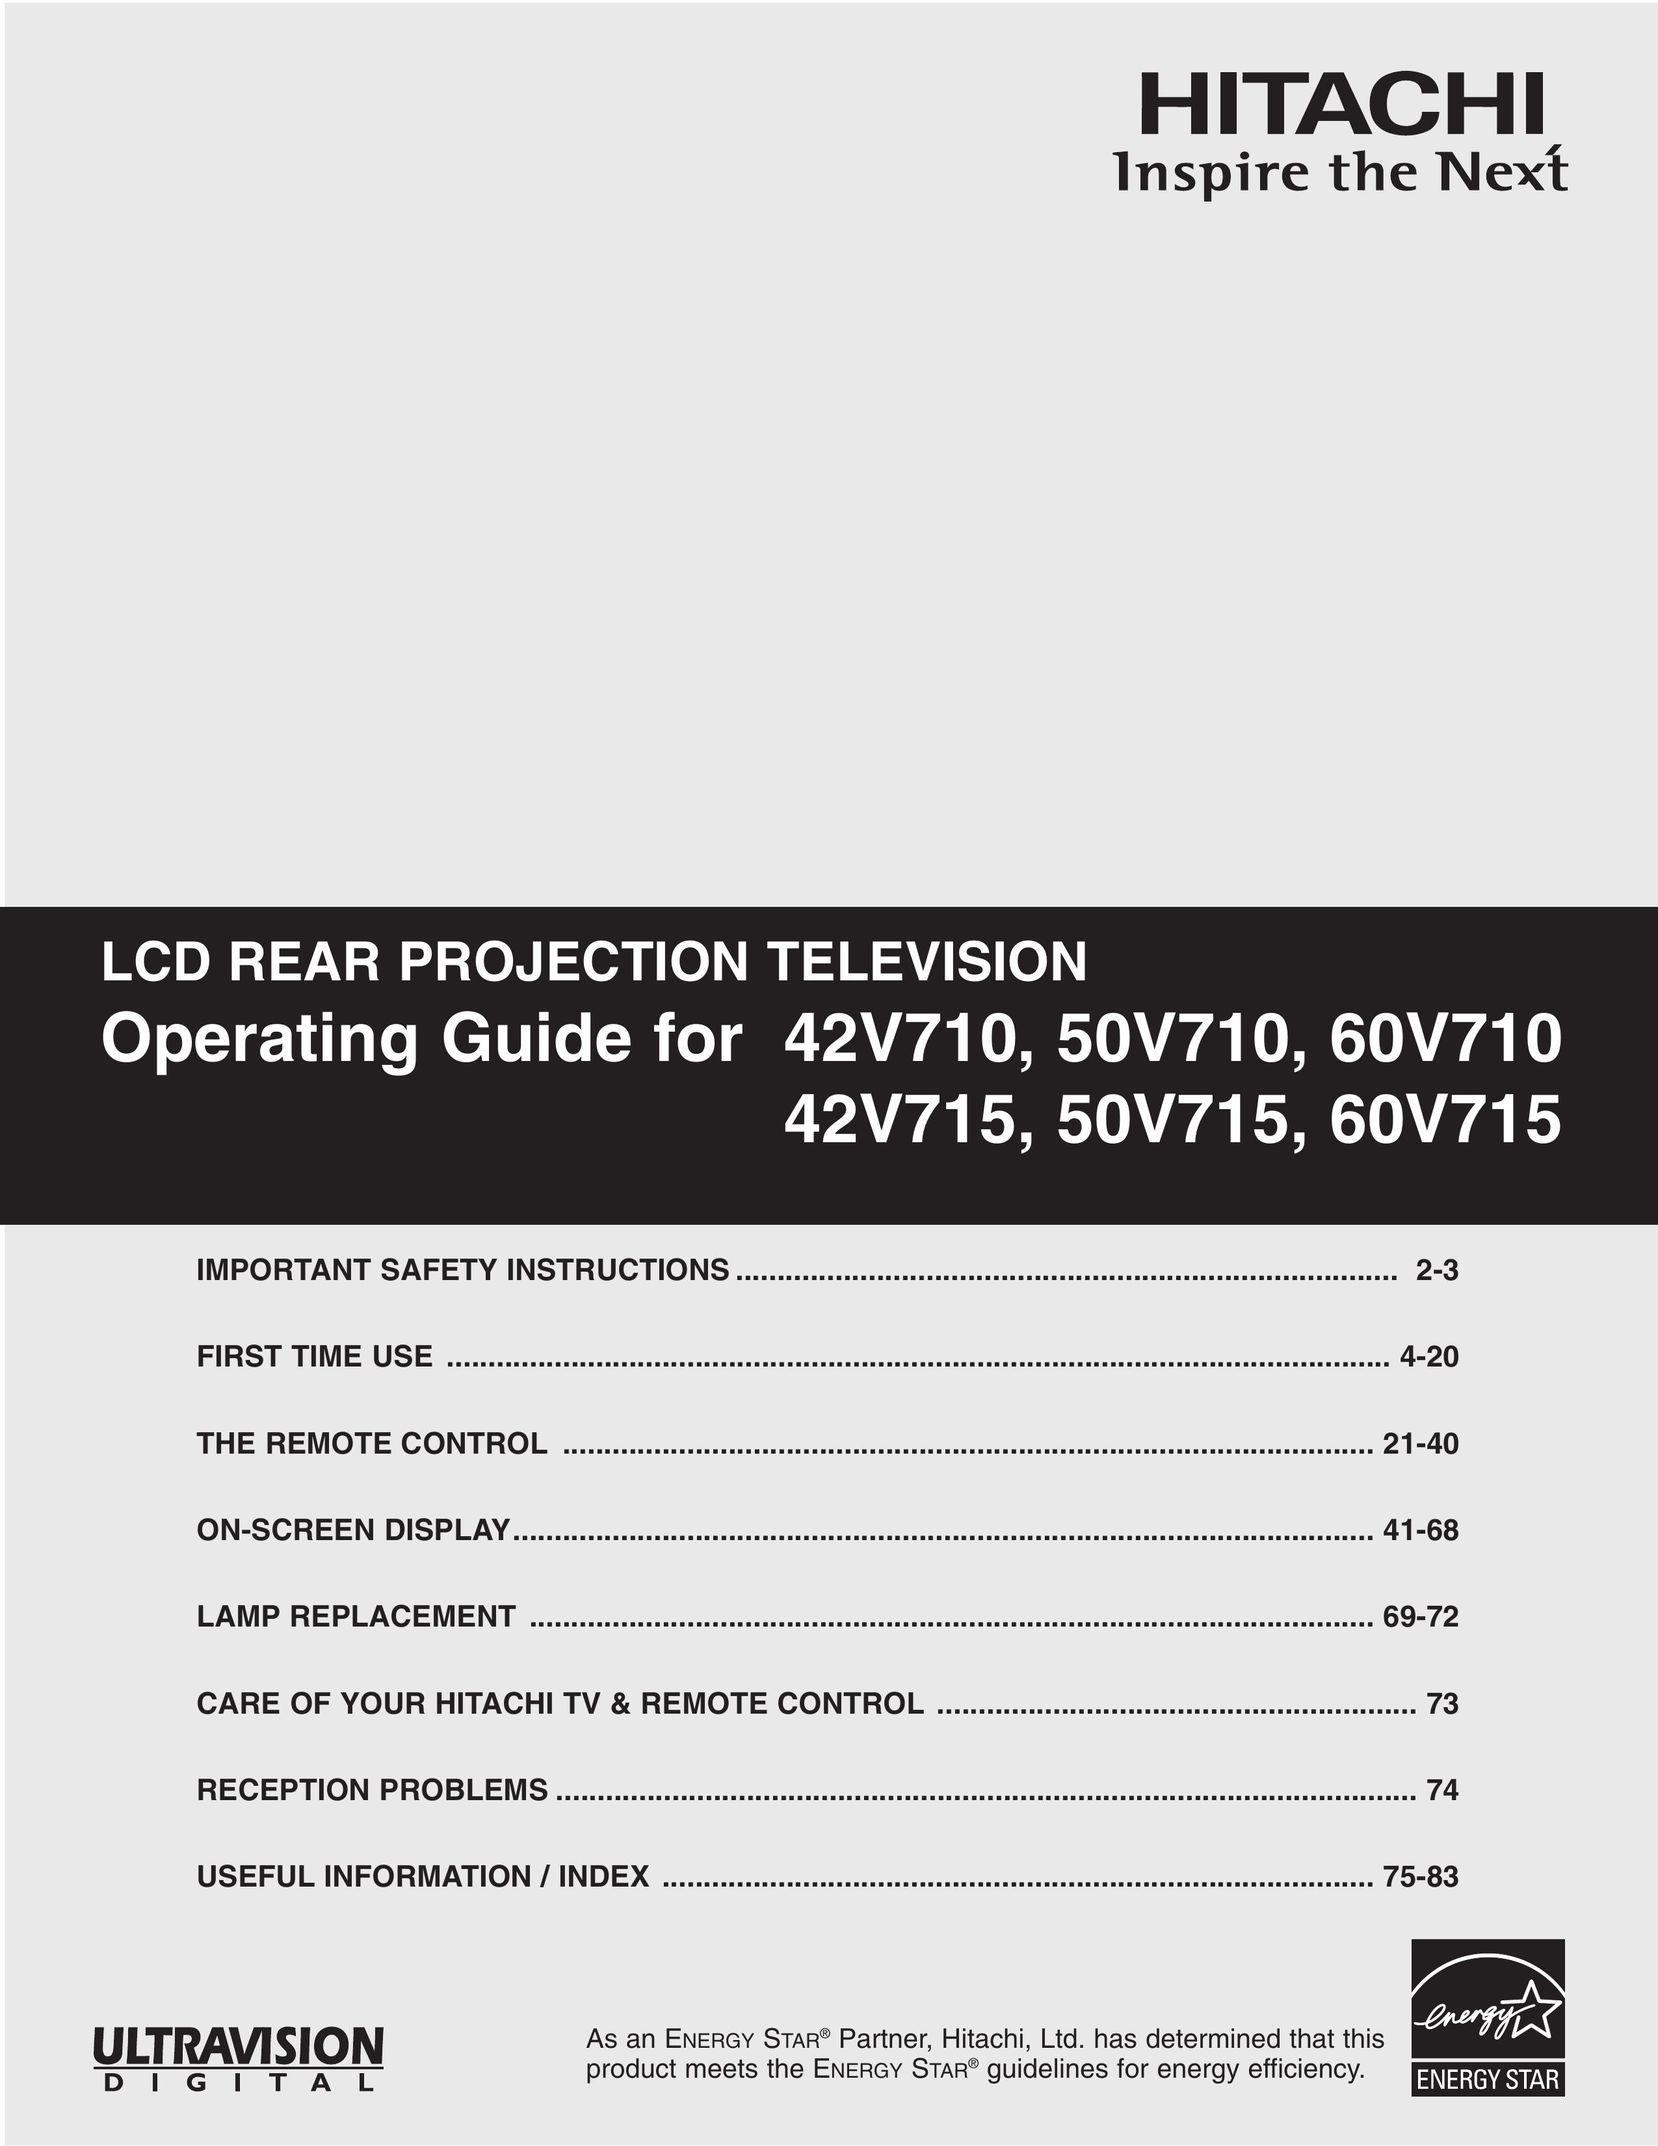 Hitachi 42V710 Projection Television User Manual